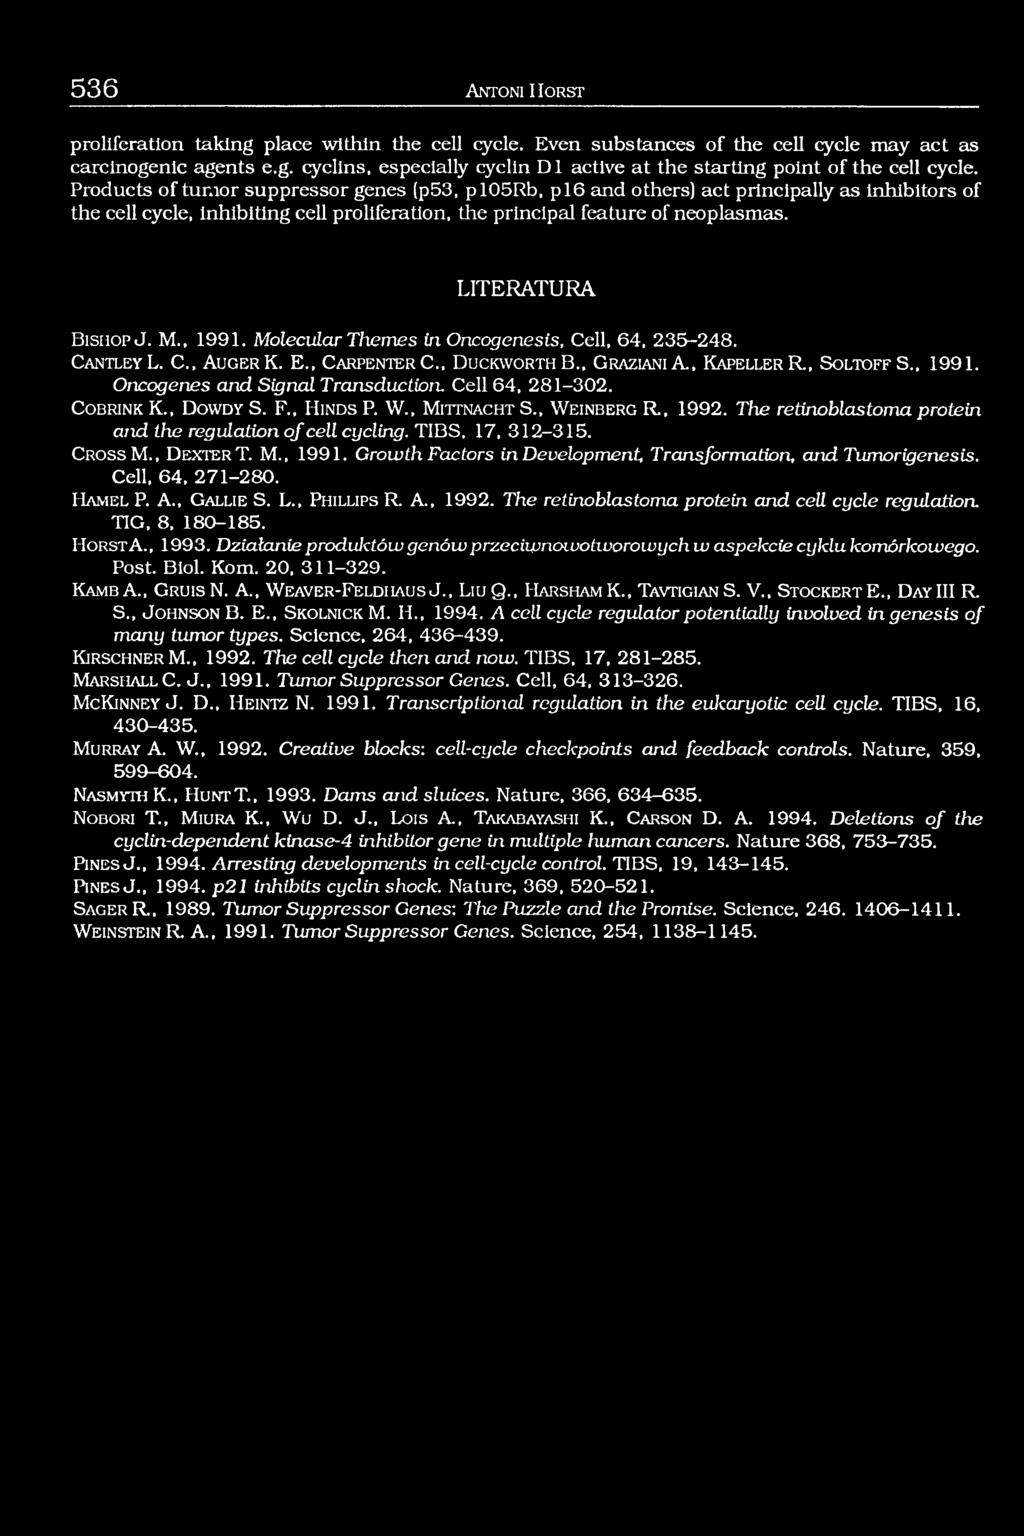 LITERATURA B ish o p J. M., 1991. Molecular Themes in Oncogenesis, Cell, 64, 235-248. C a n t l e y L. C., A u g e r K. E., C a r p e n t e r C., D u c k w o r t h B.